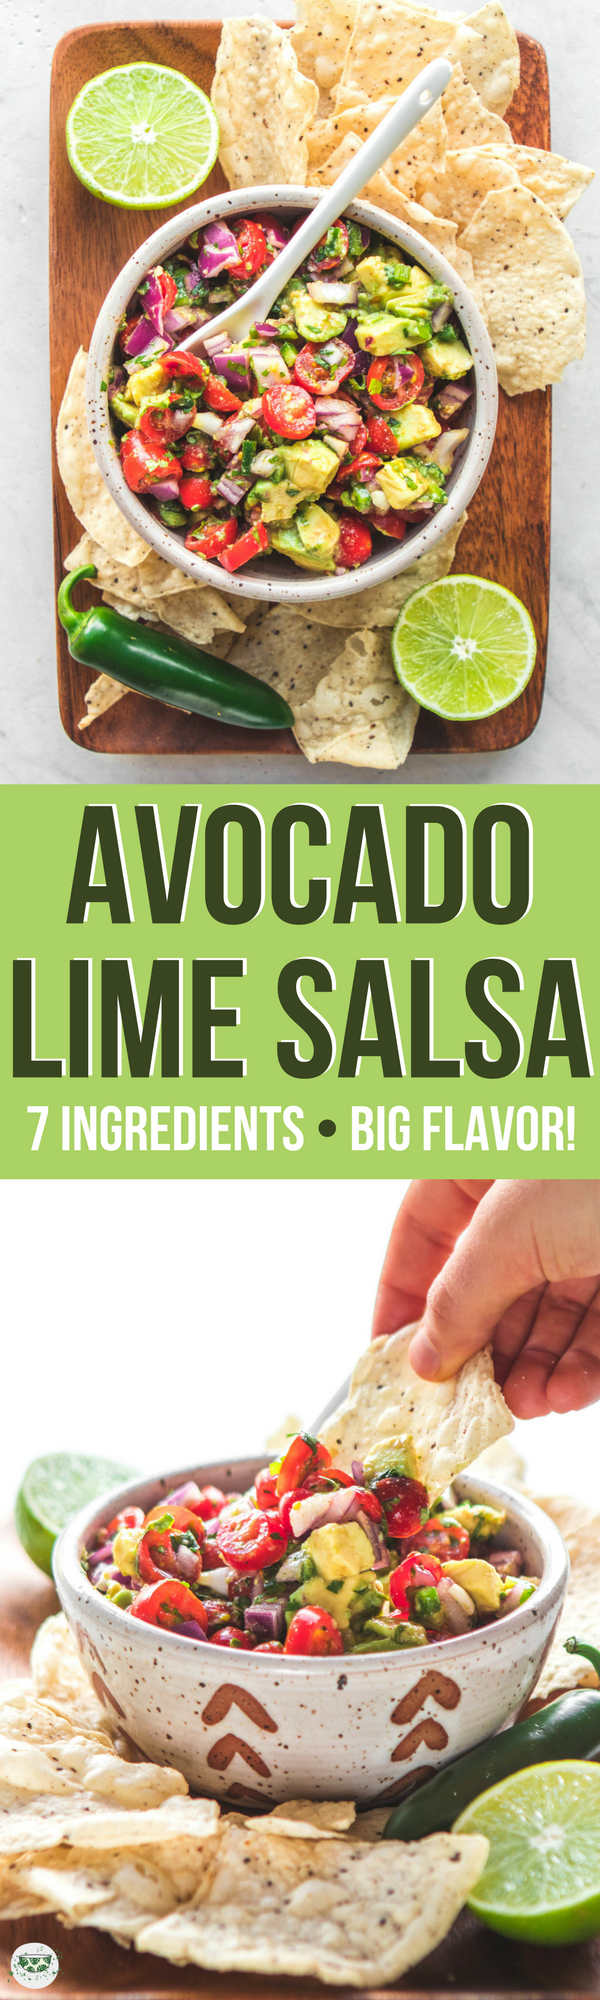 avocado salsa pinterest image